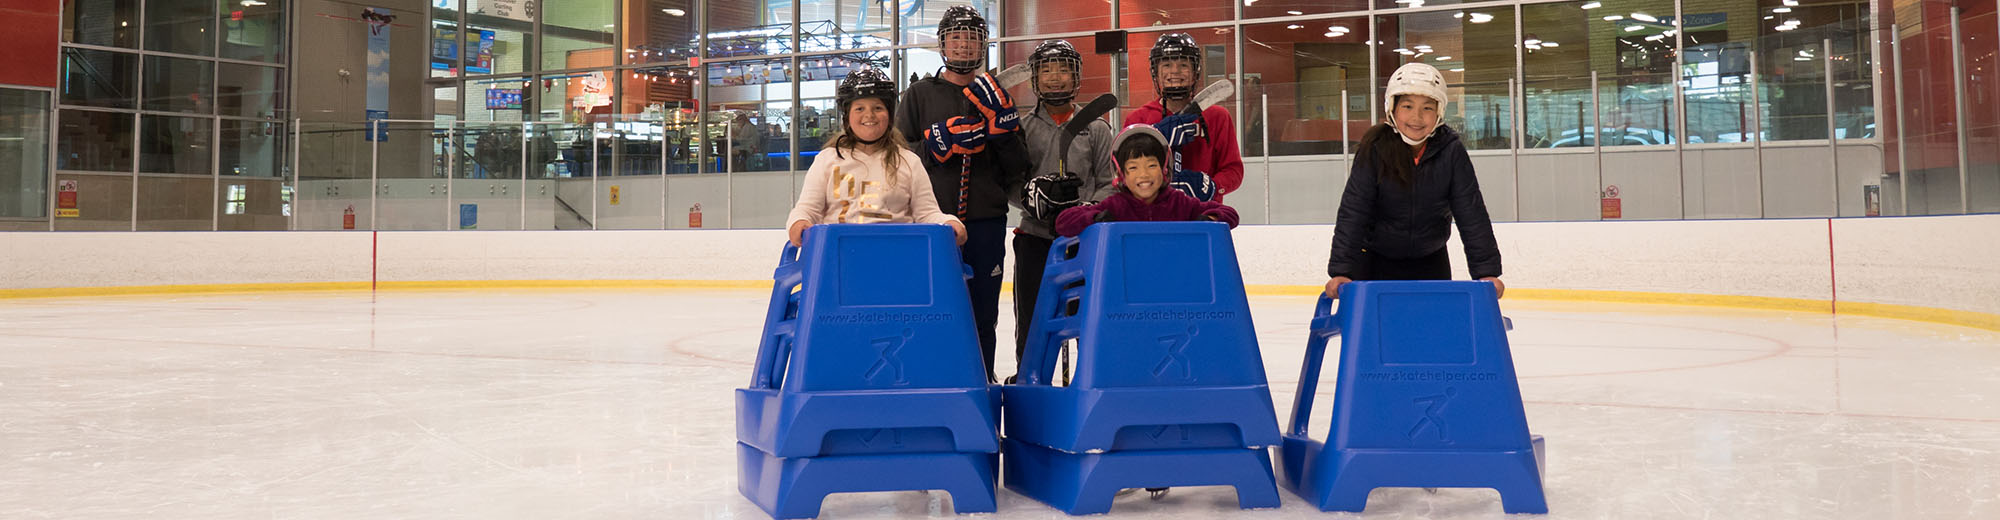 Group of kids with Skate Helper skating aid